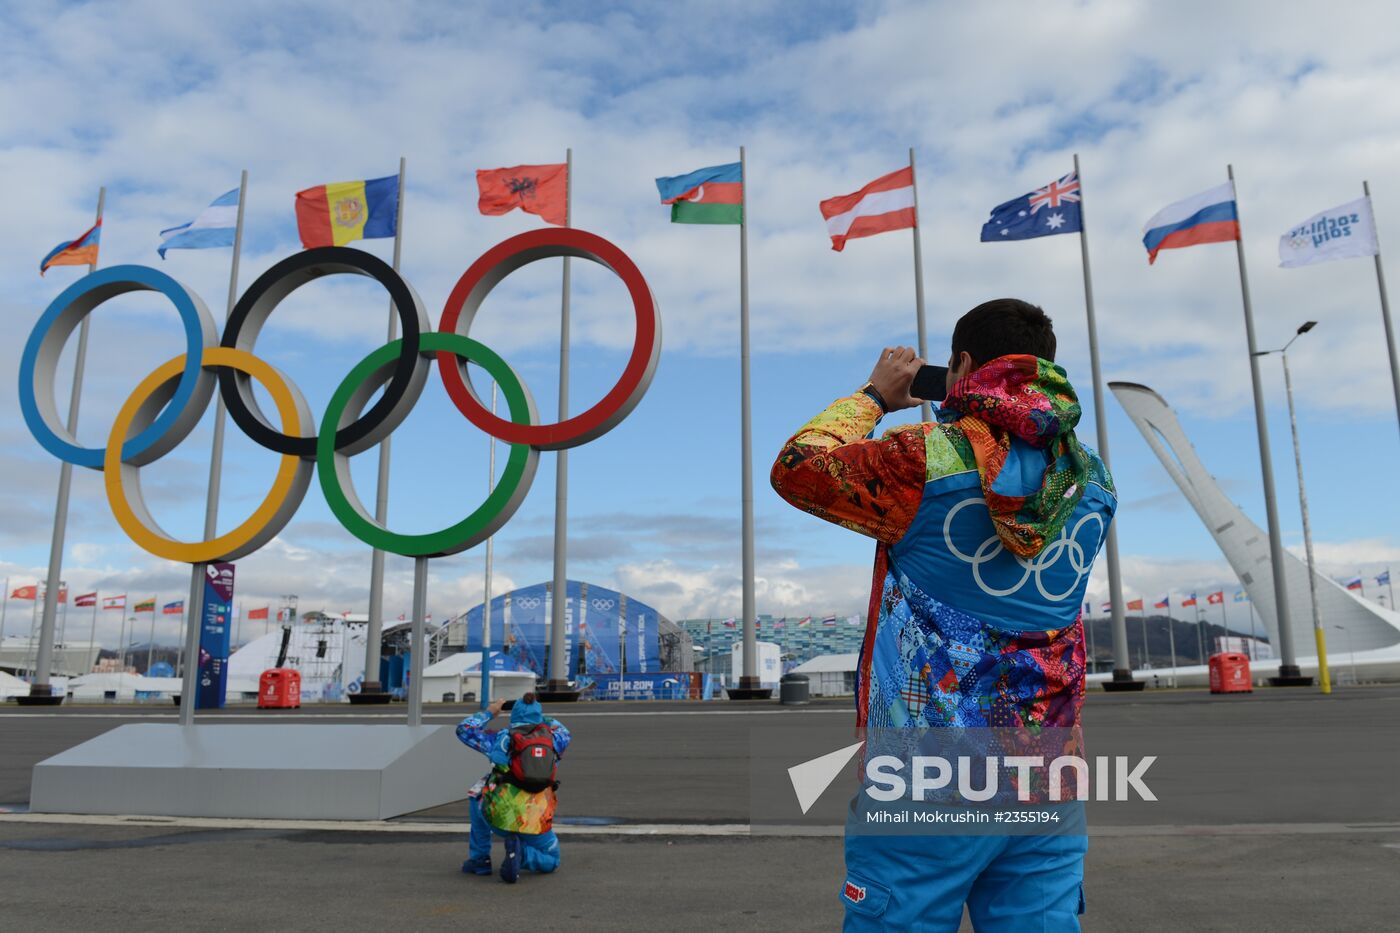 Sochi prepares to host XXII Olympic winter games